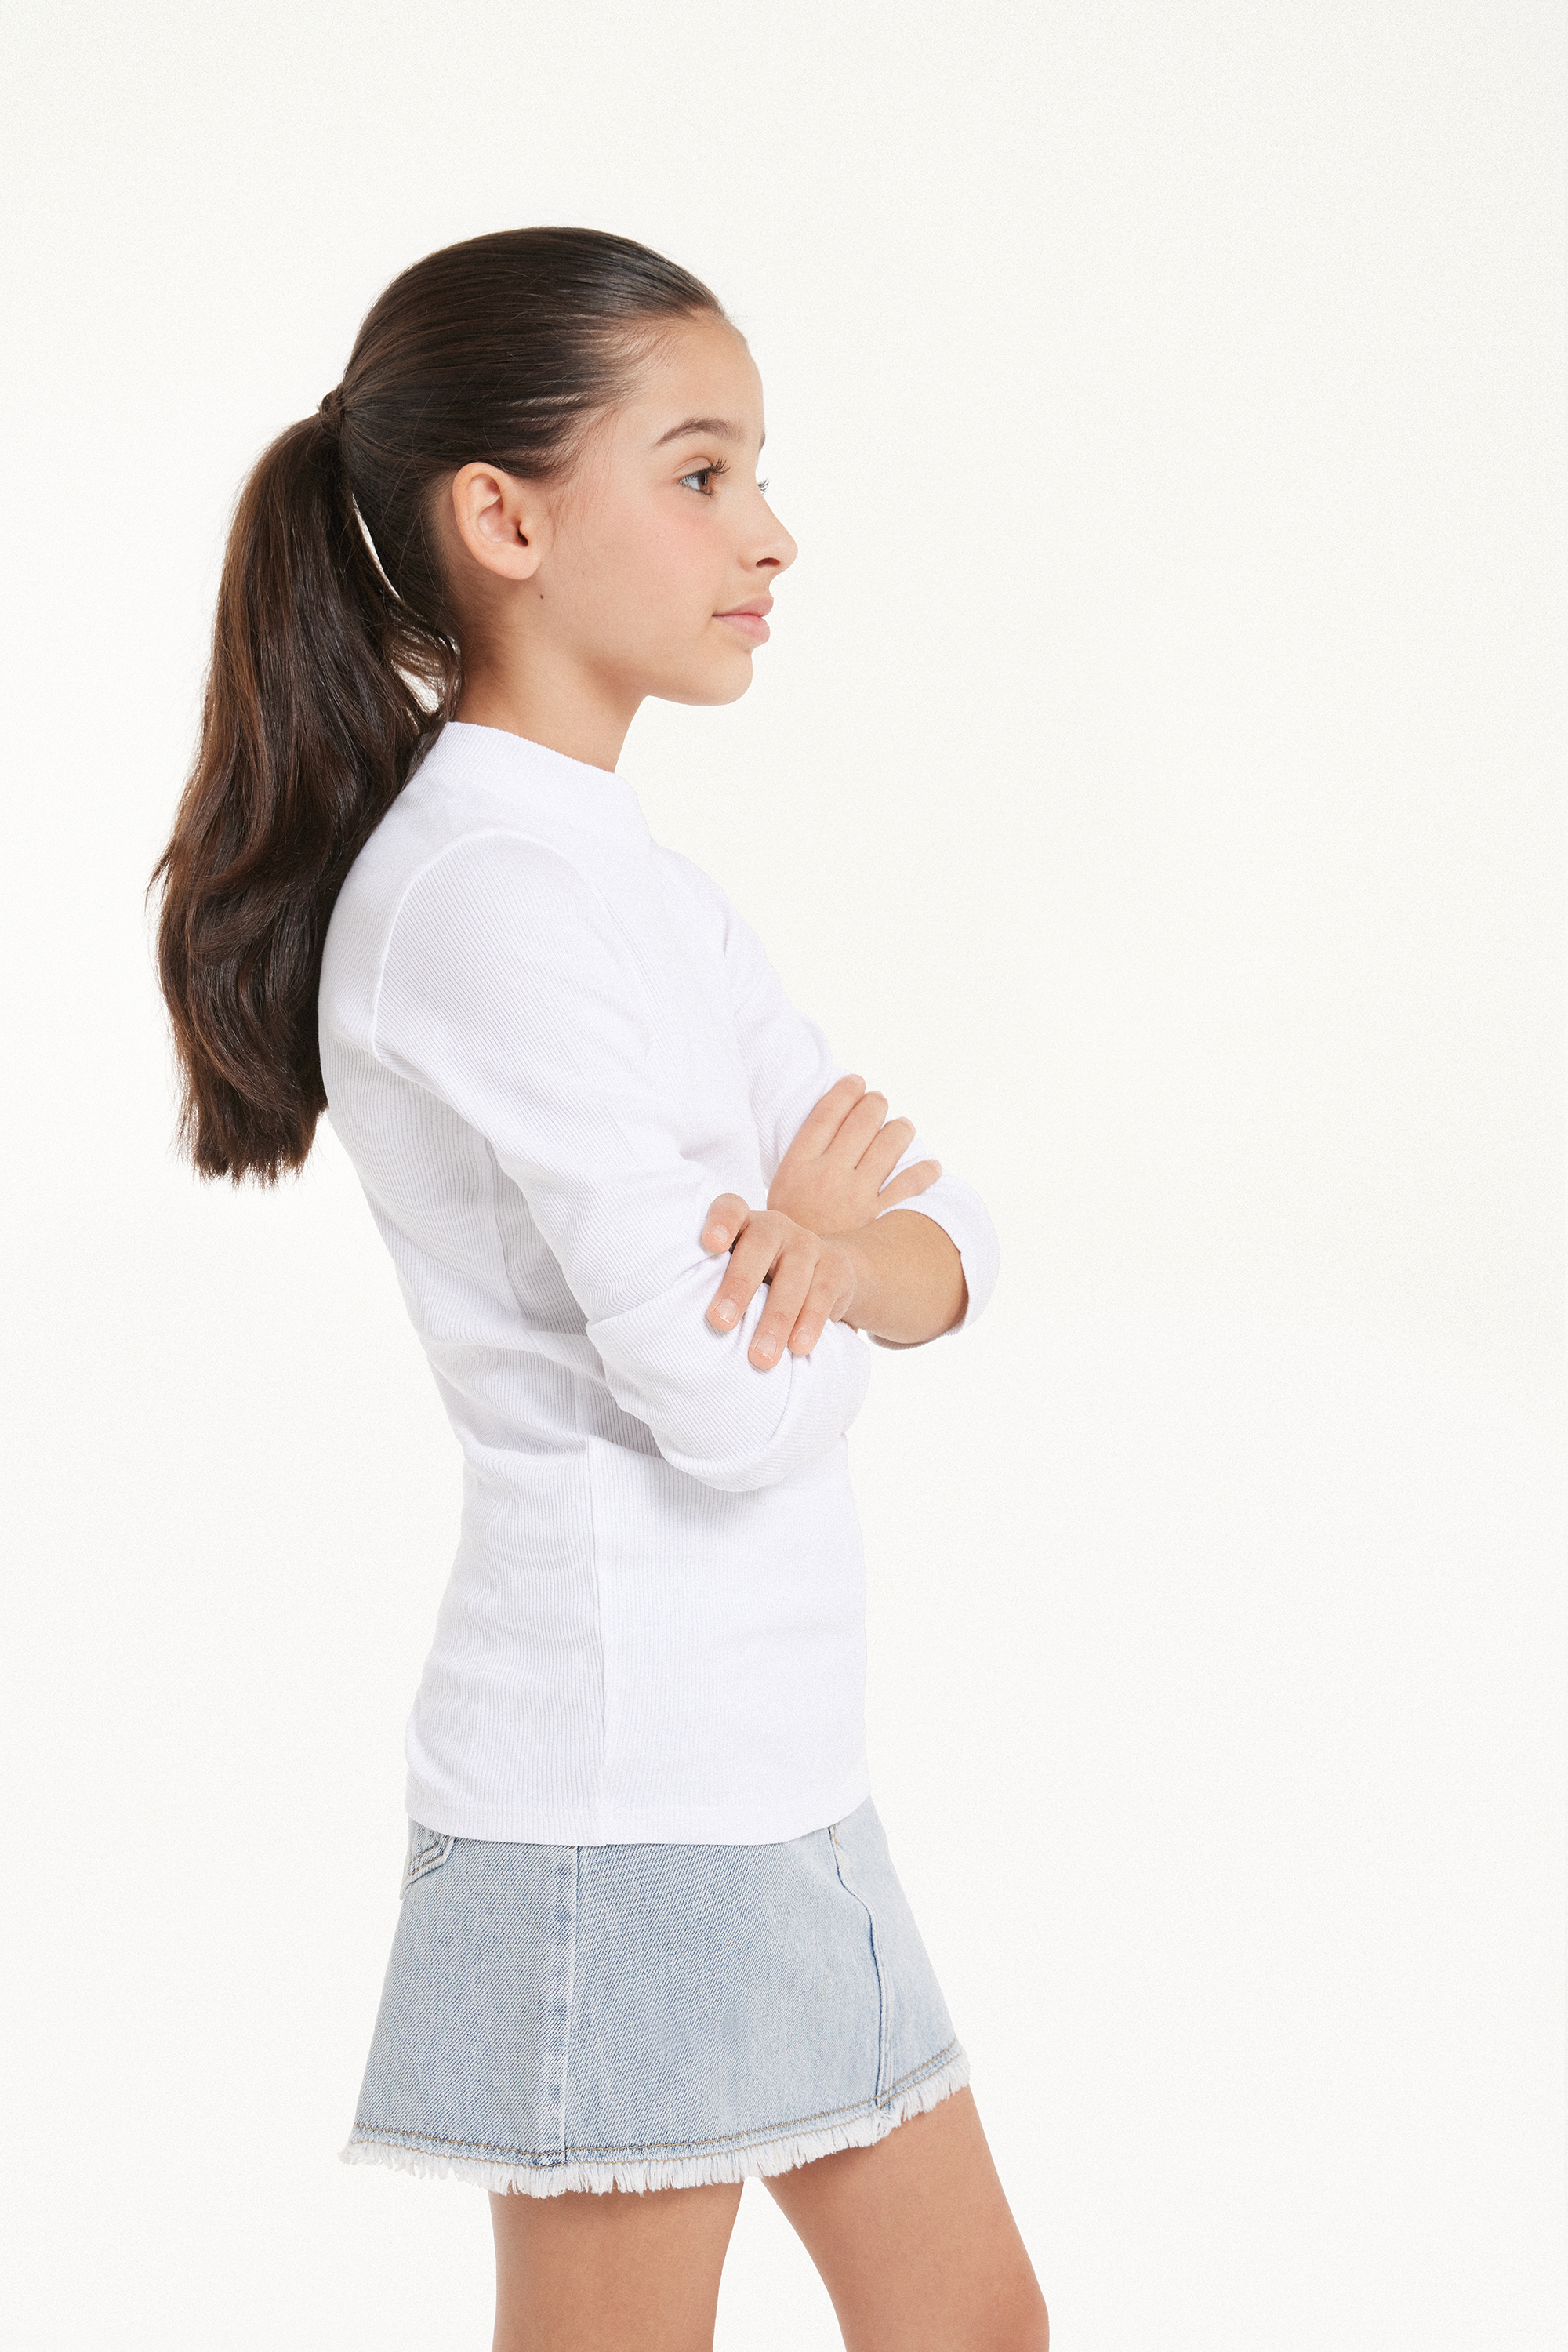 Kids' Unisex Long-Sleeved Ribbed Turtleneck Top